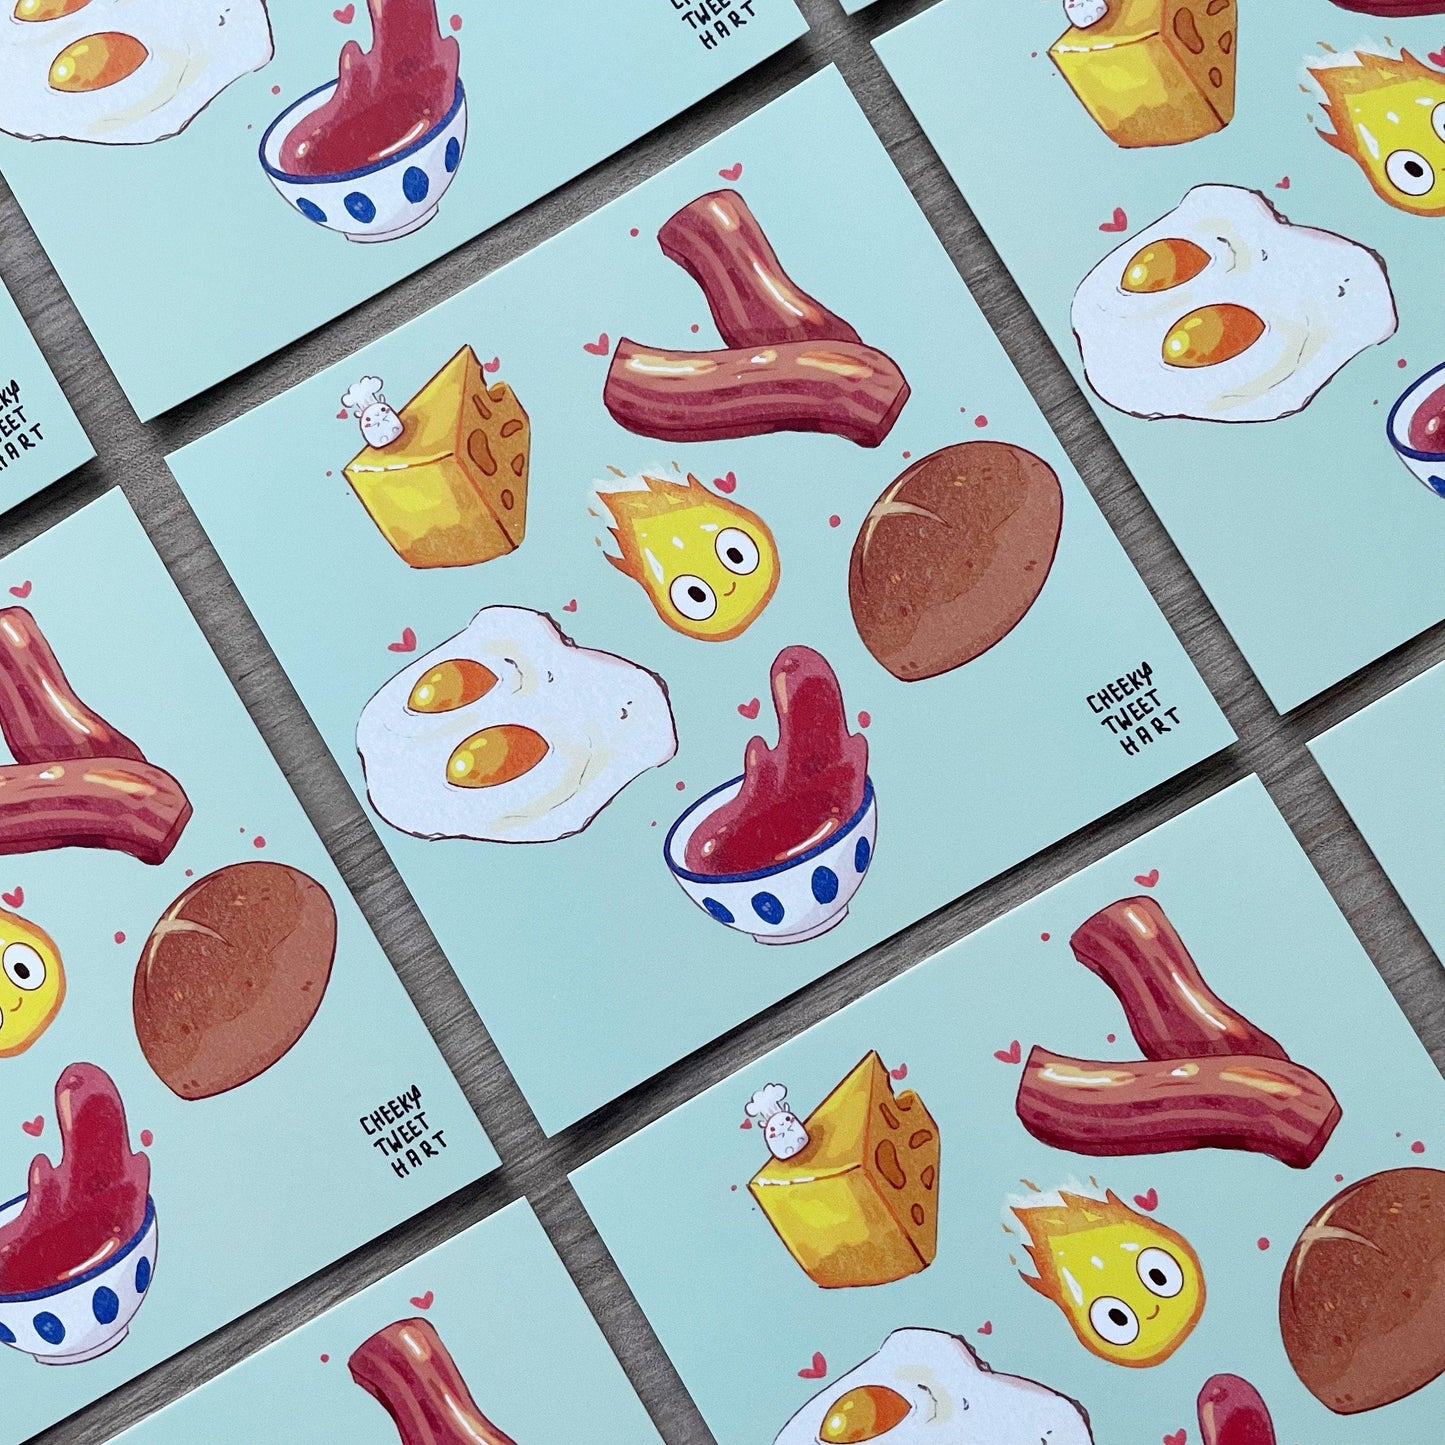 SG Castle Breakfast Ingredients Hamry Hamster Calciferchan Anime Food Art Prints #AP009